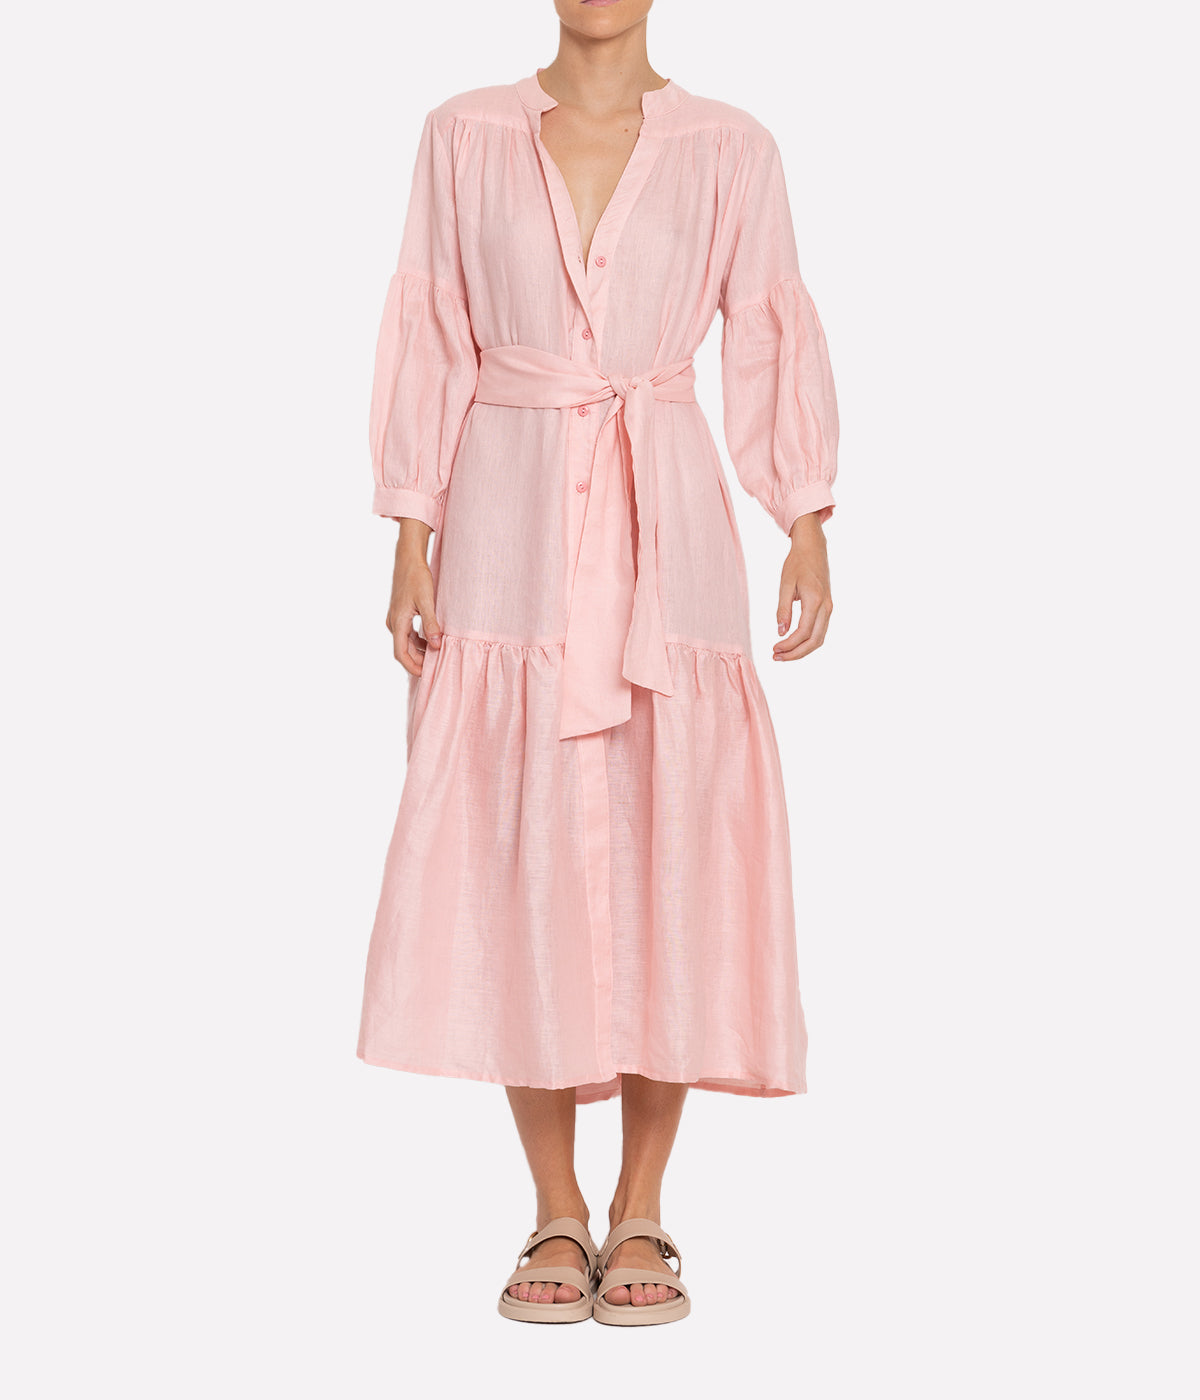 Corfu Long Sleeve Dress in Pink